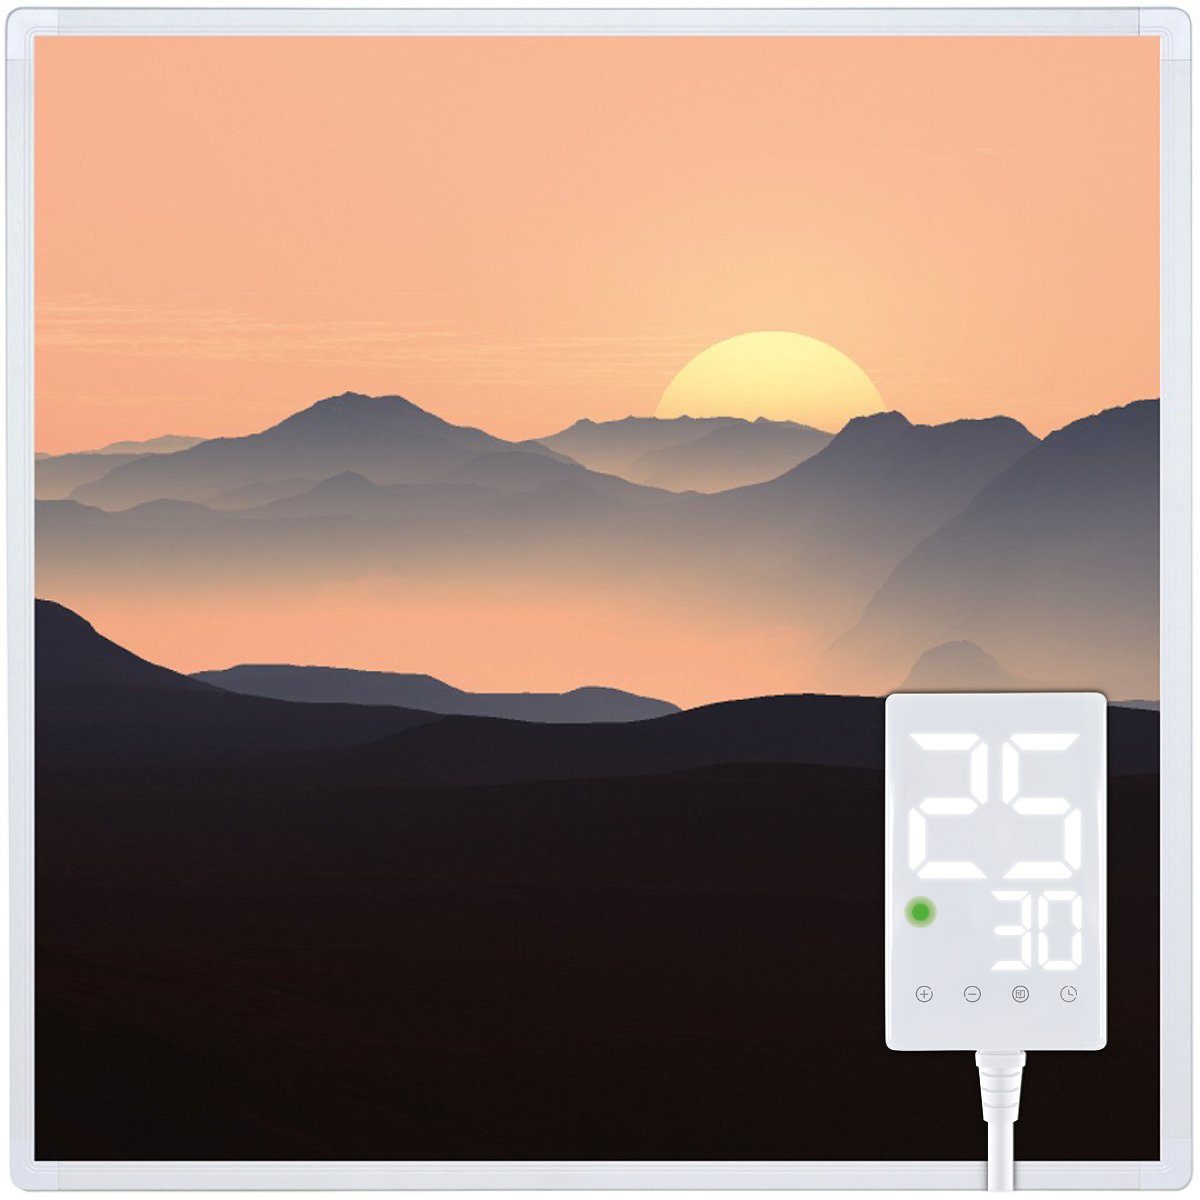 Garantie mit Infrarotheizung Sonnenaufgang - 28 Heizung Heidenfeld Elektroheizung Programme - 1000 W, Heizkörper Wand Thermostat, 300 - HF-HP105 Infrarot Bild J. 10